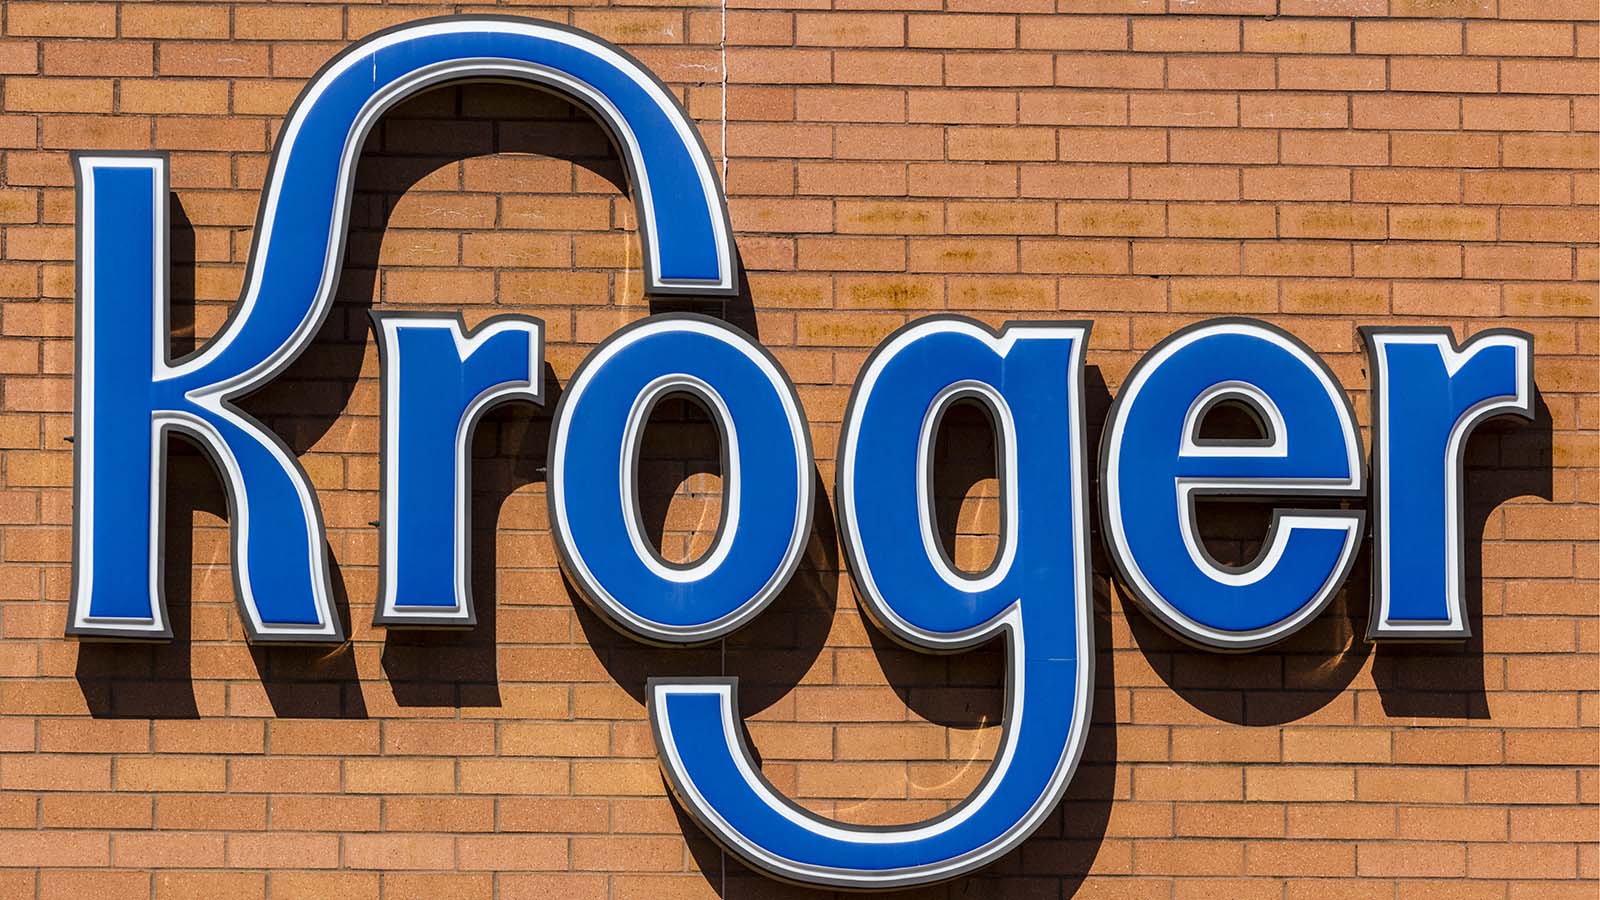 A Kroger (KR Stock) logo on a building.